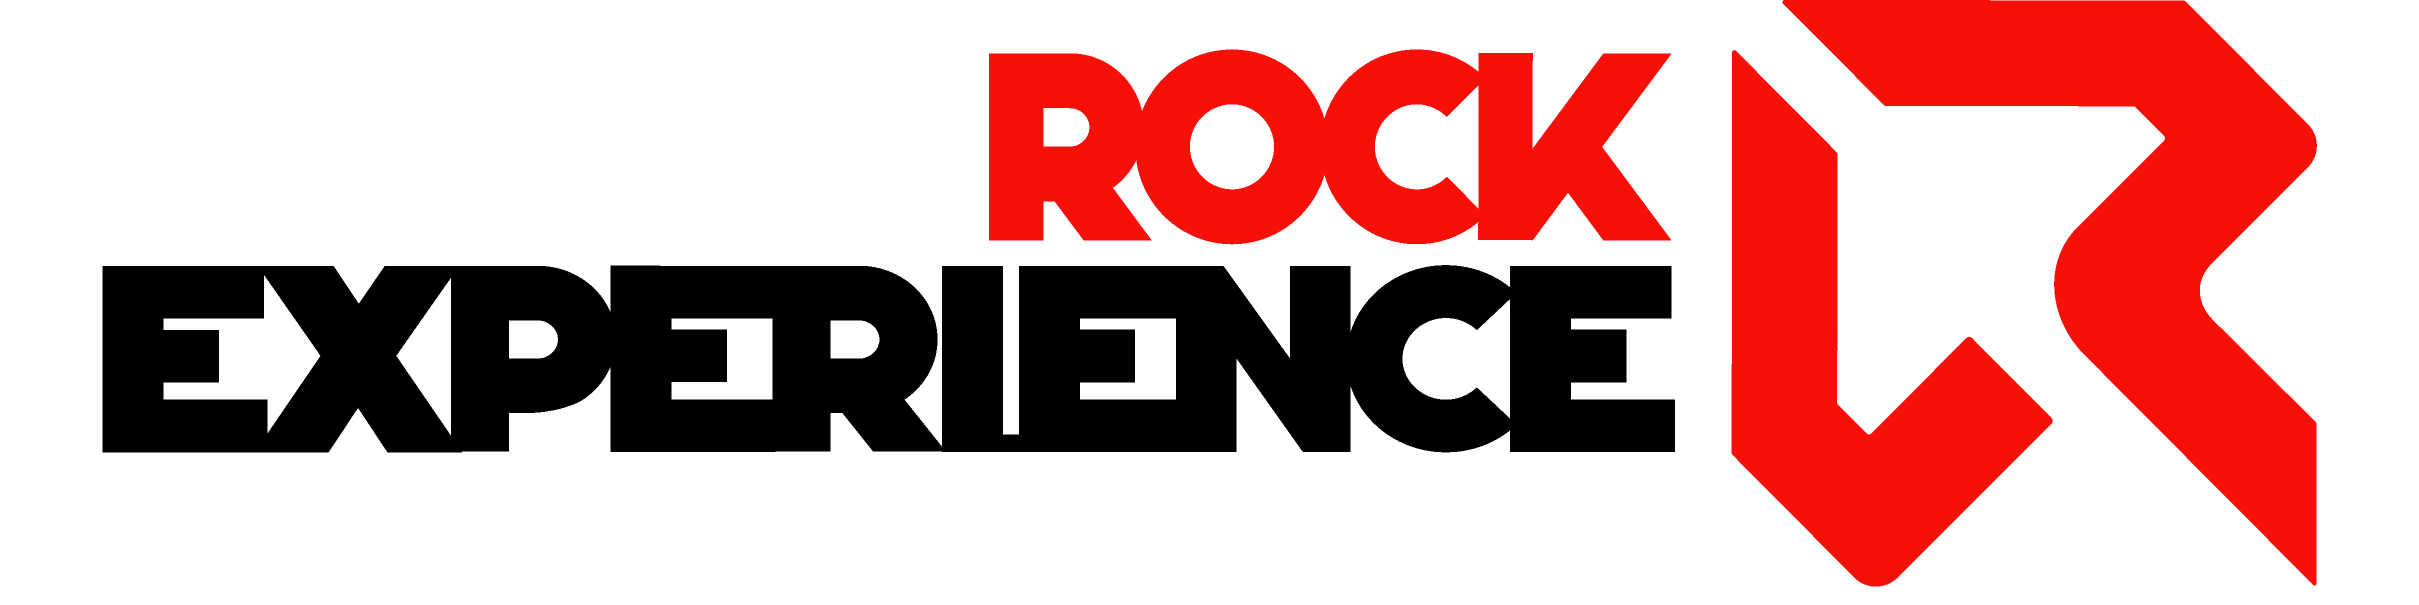 logo rock experience on white 01tagliato